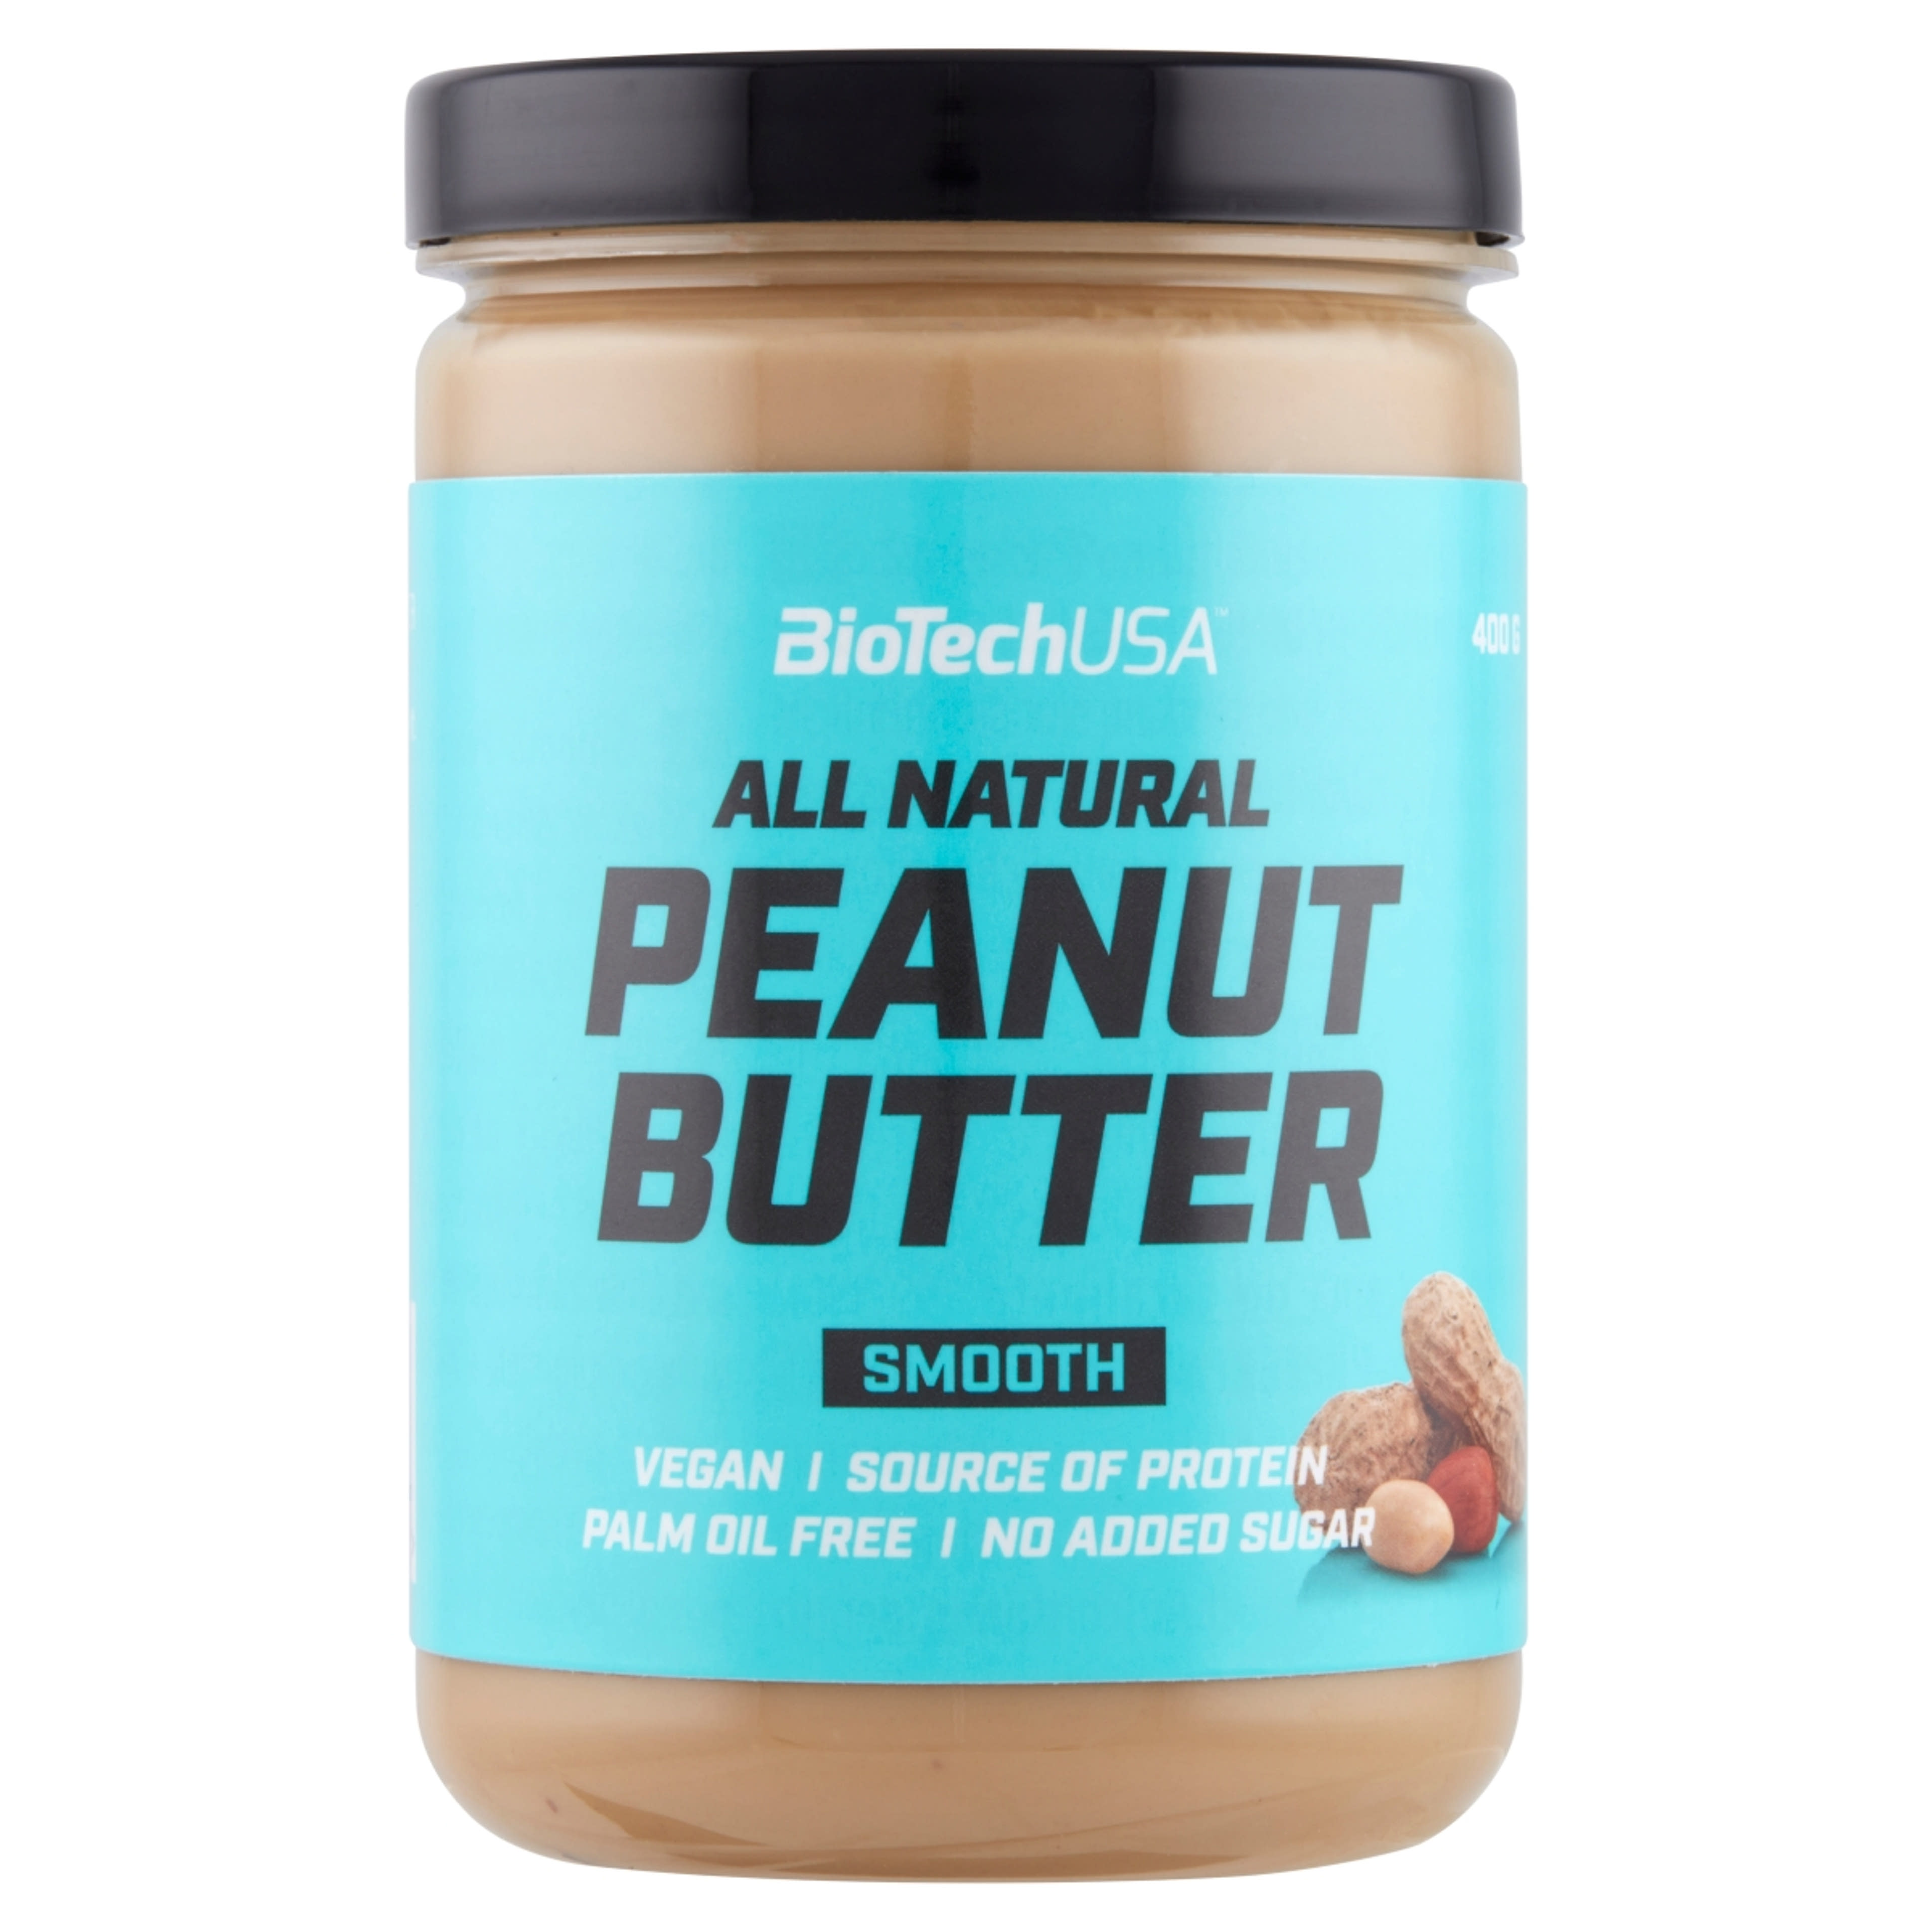 BioTechUSA Peanut Butter smooth - 400 g-1